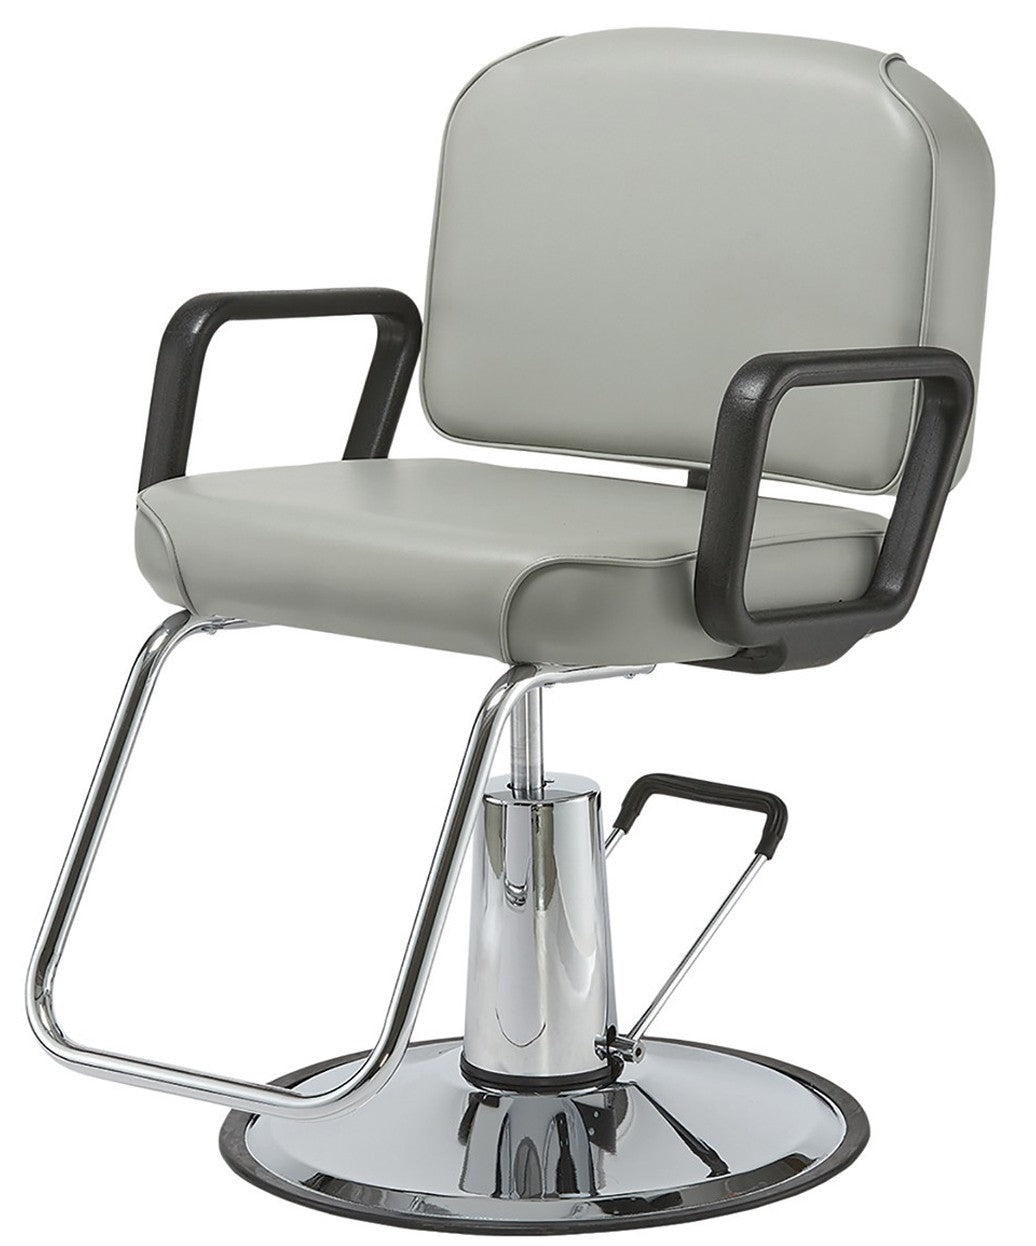 Pibbs 4306 Lambada Styling Chair